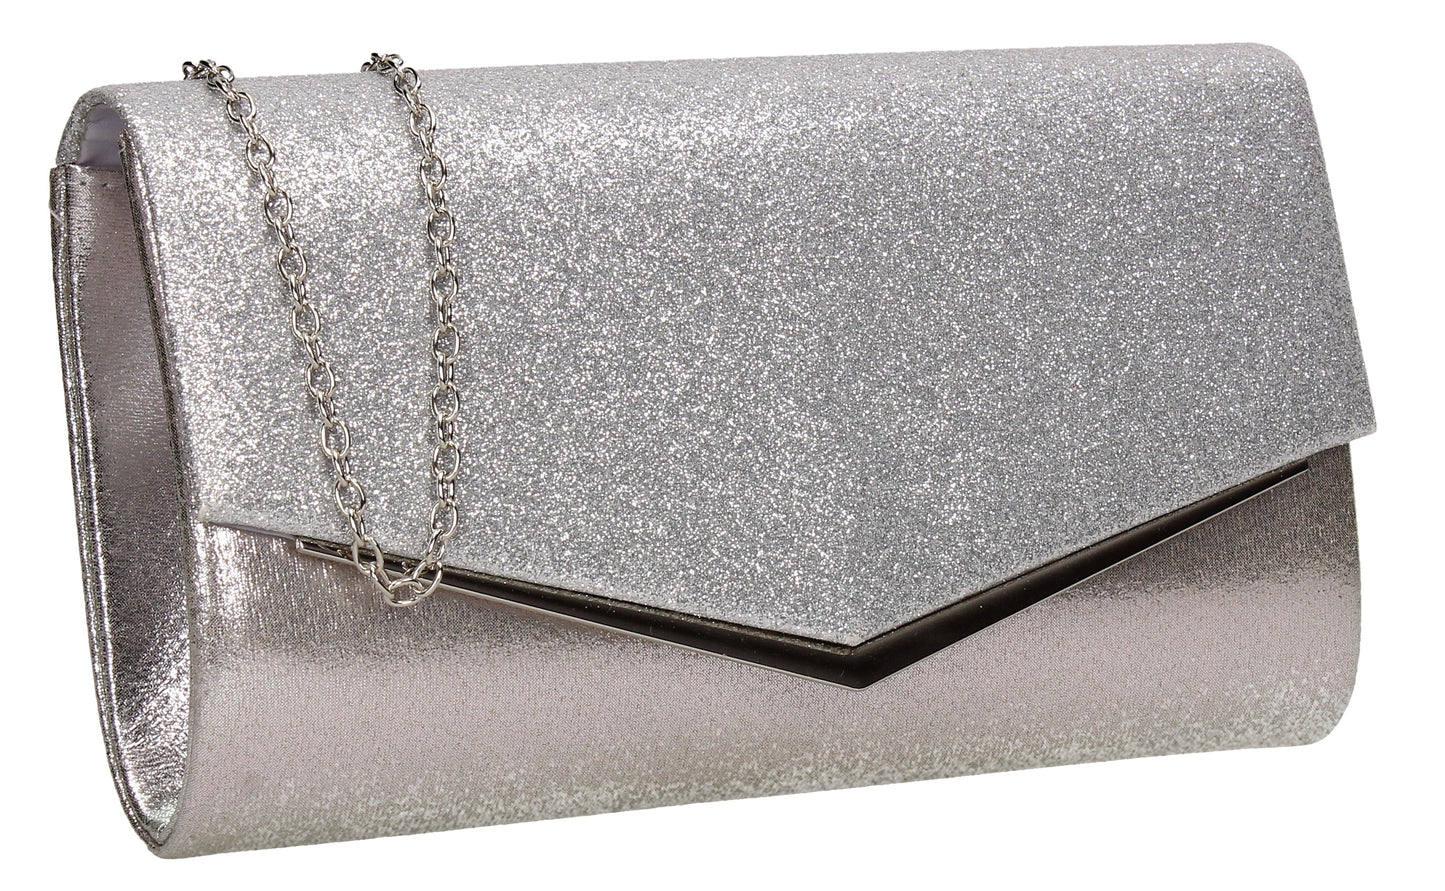 SWANKYSWANS Janey Clutch Bag Silver Cute Cheap Clutch Bag For Weddings School and Work